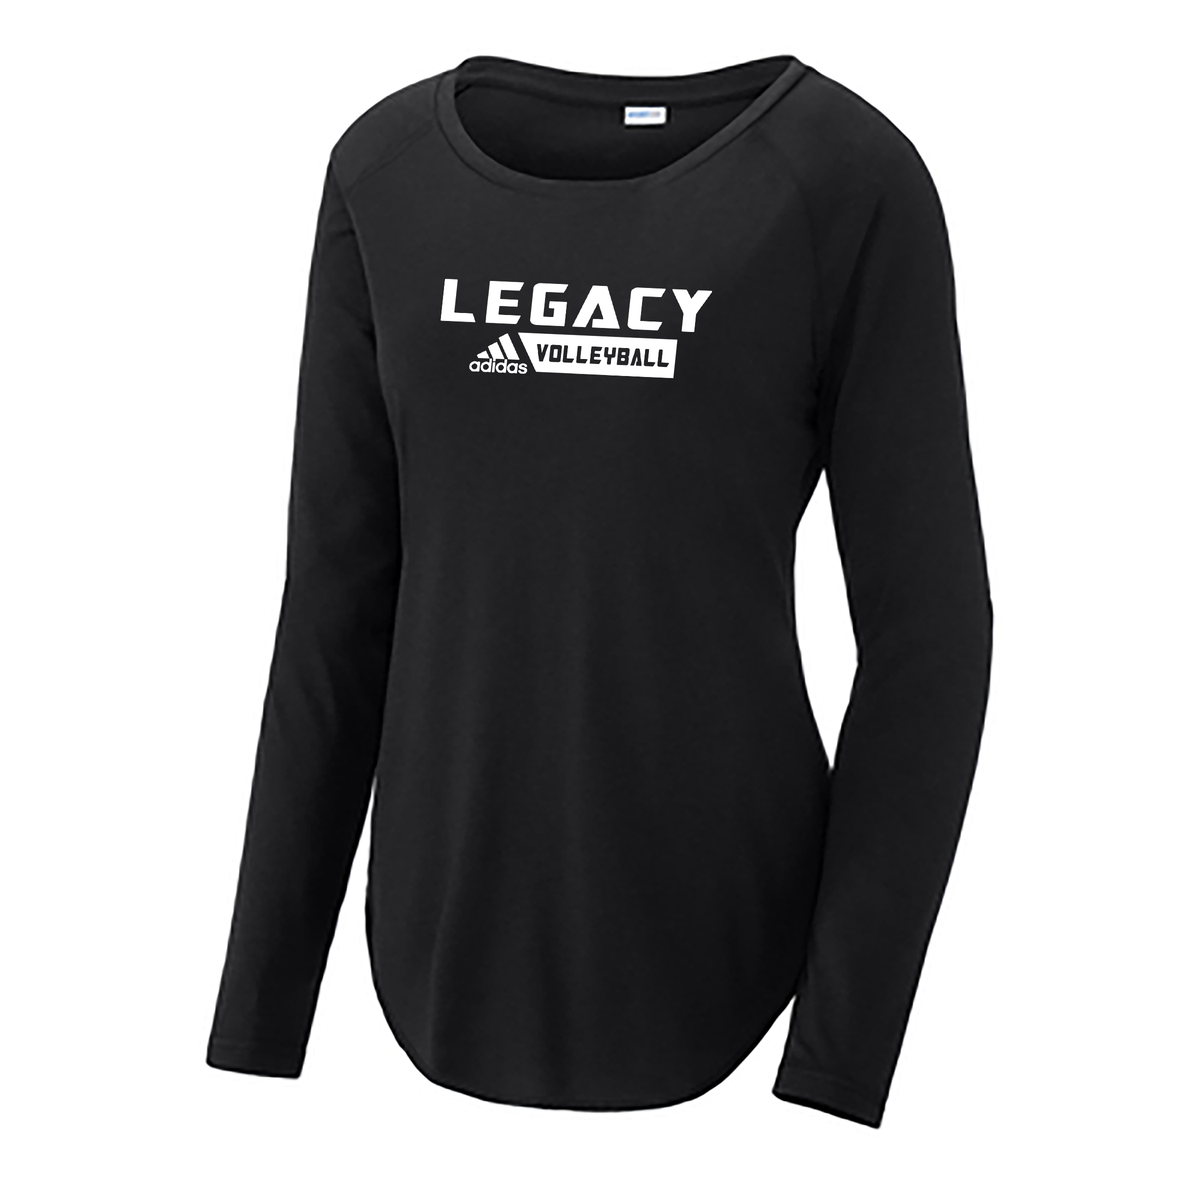 Legacy Volleyball Club Women's Raglan Long Sleeve CottonTouch